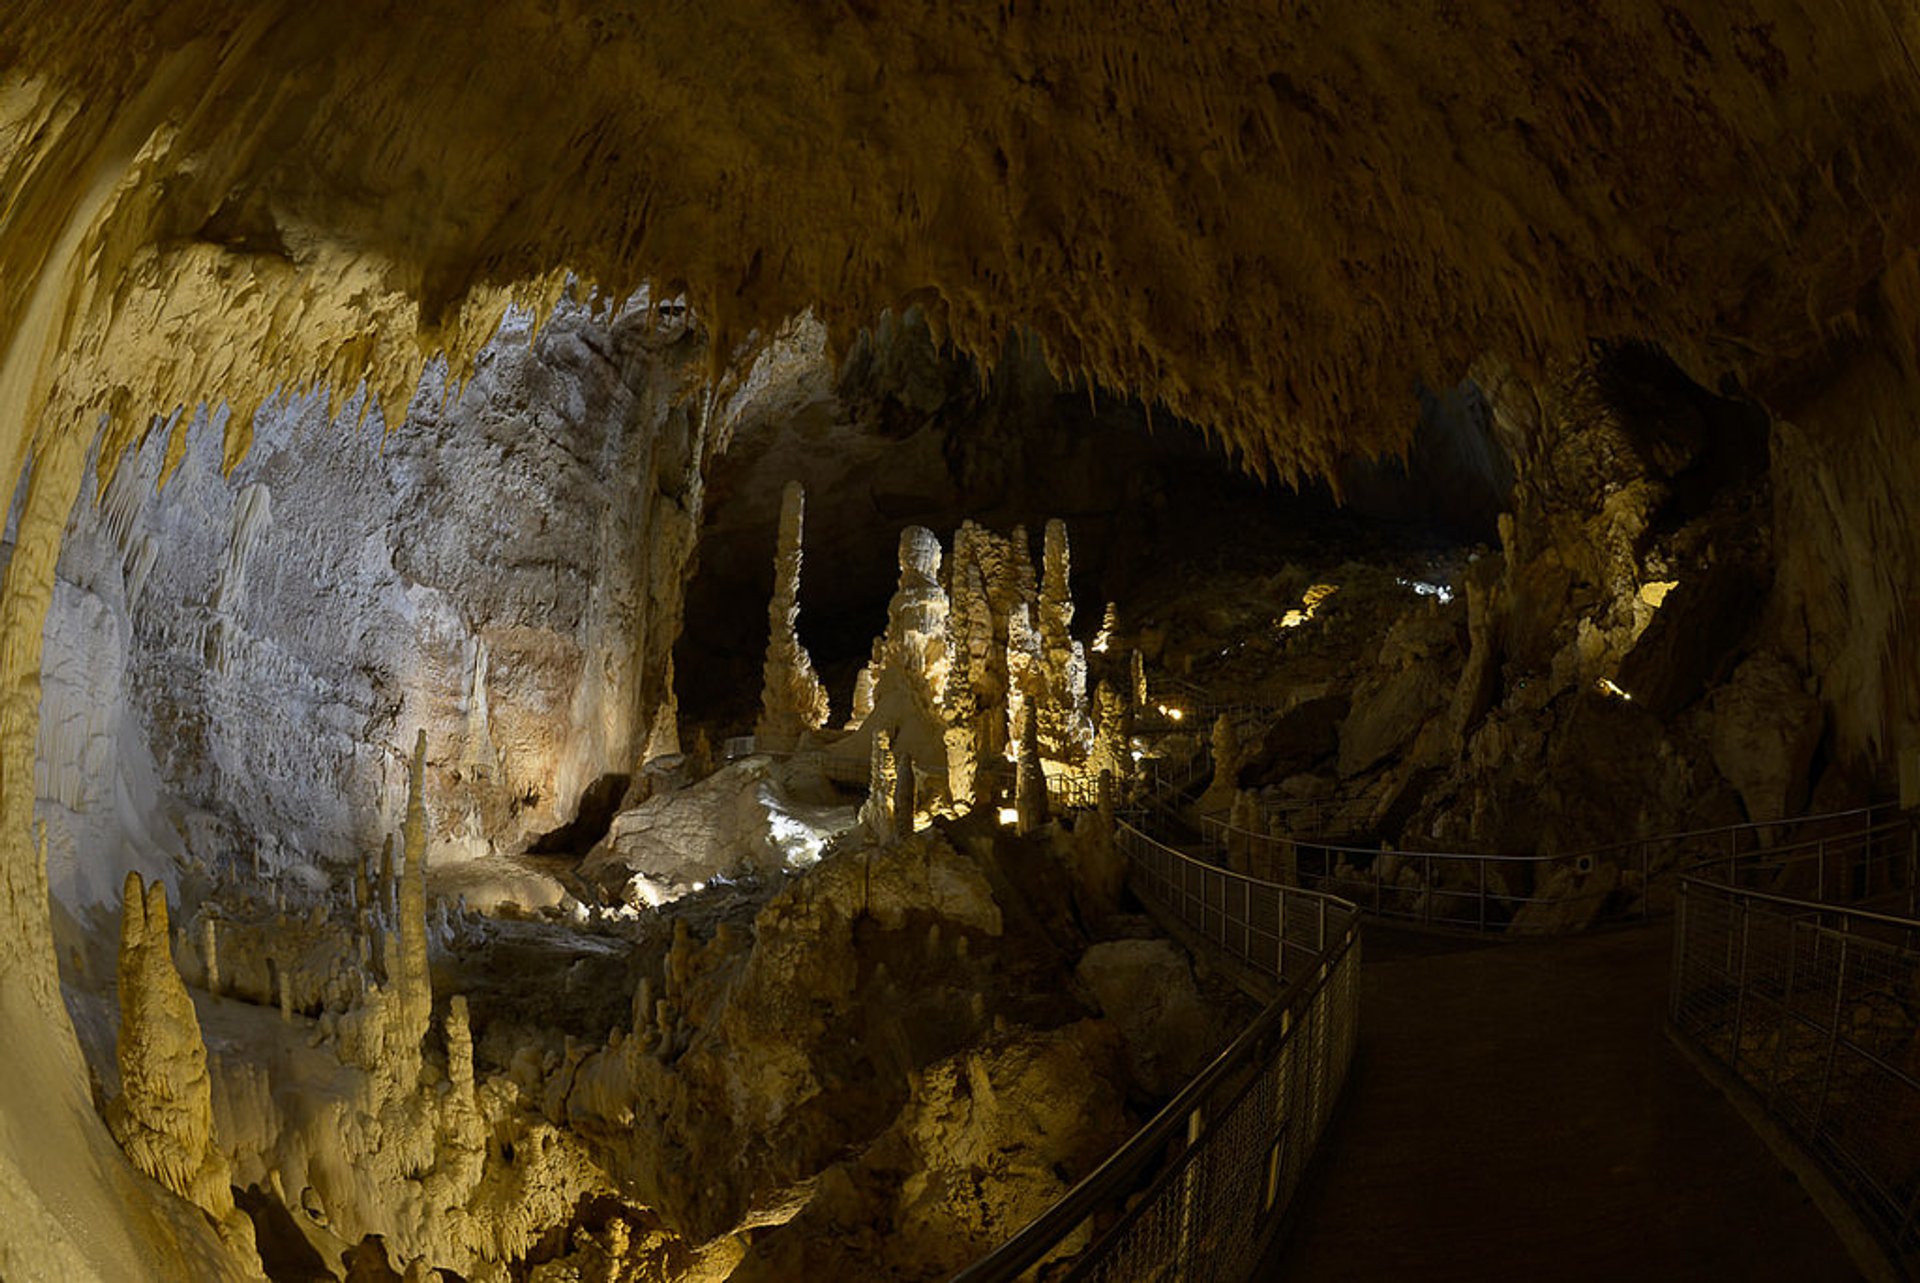 Cavernas de Frasassi (Grotte di Frasassi), Genga